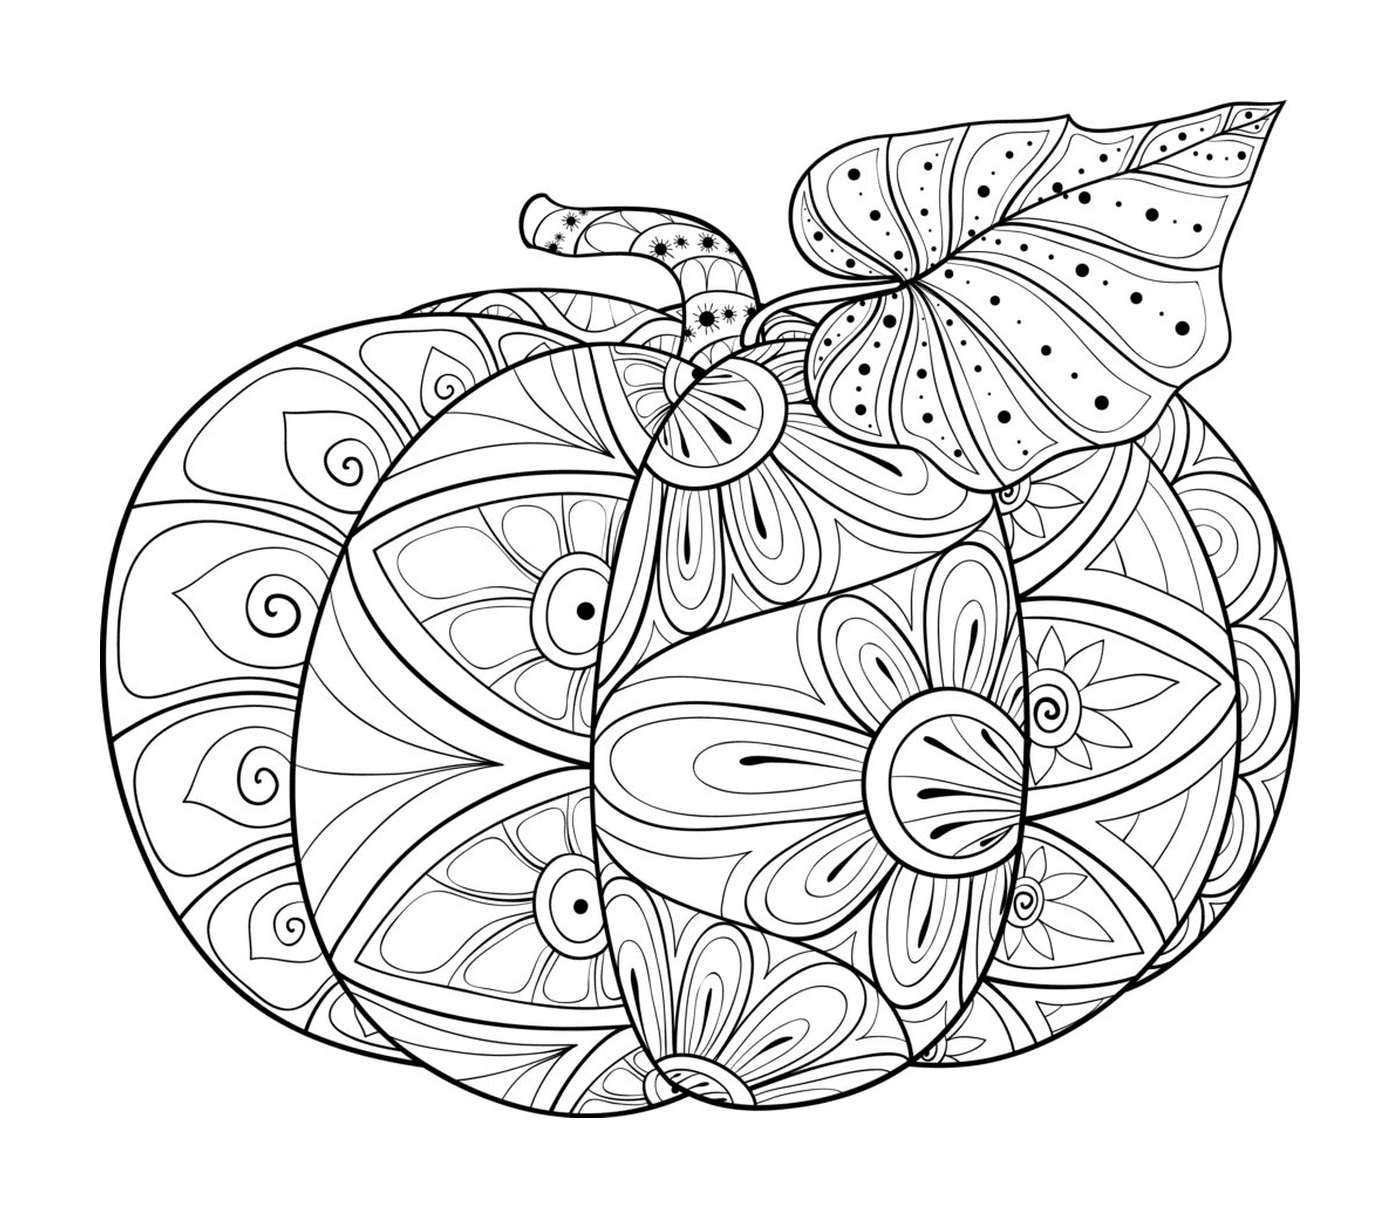  Halloween Mandala with pumpkins and candles 